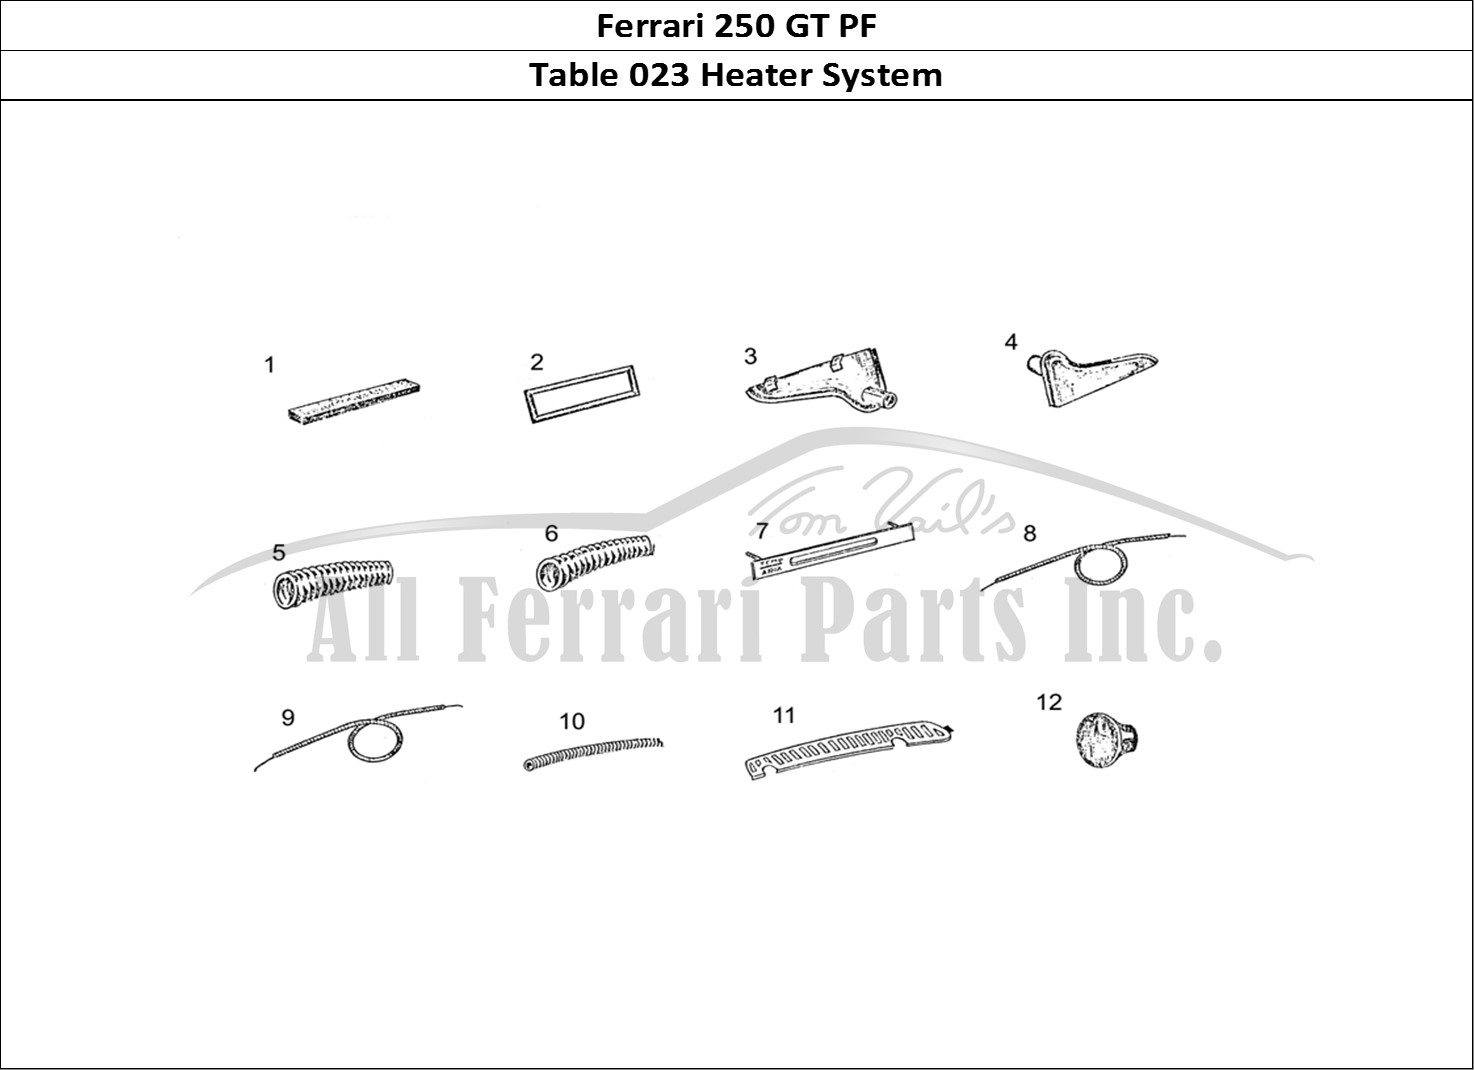 Ferrari Parts Ferrari 250 GT (Coachwork) Page 023 Heater System